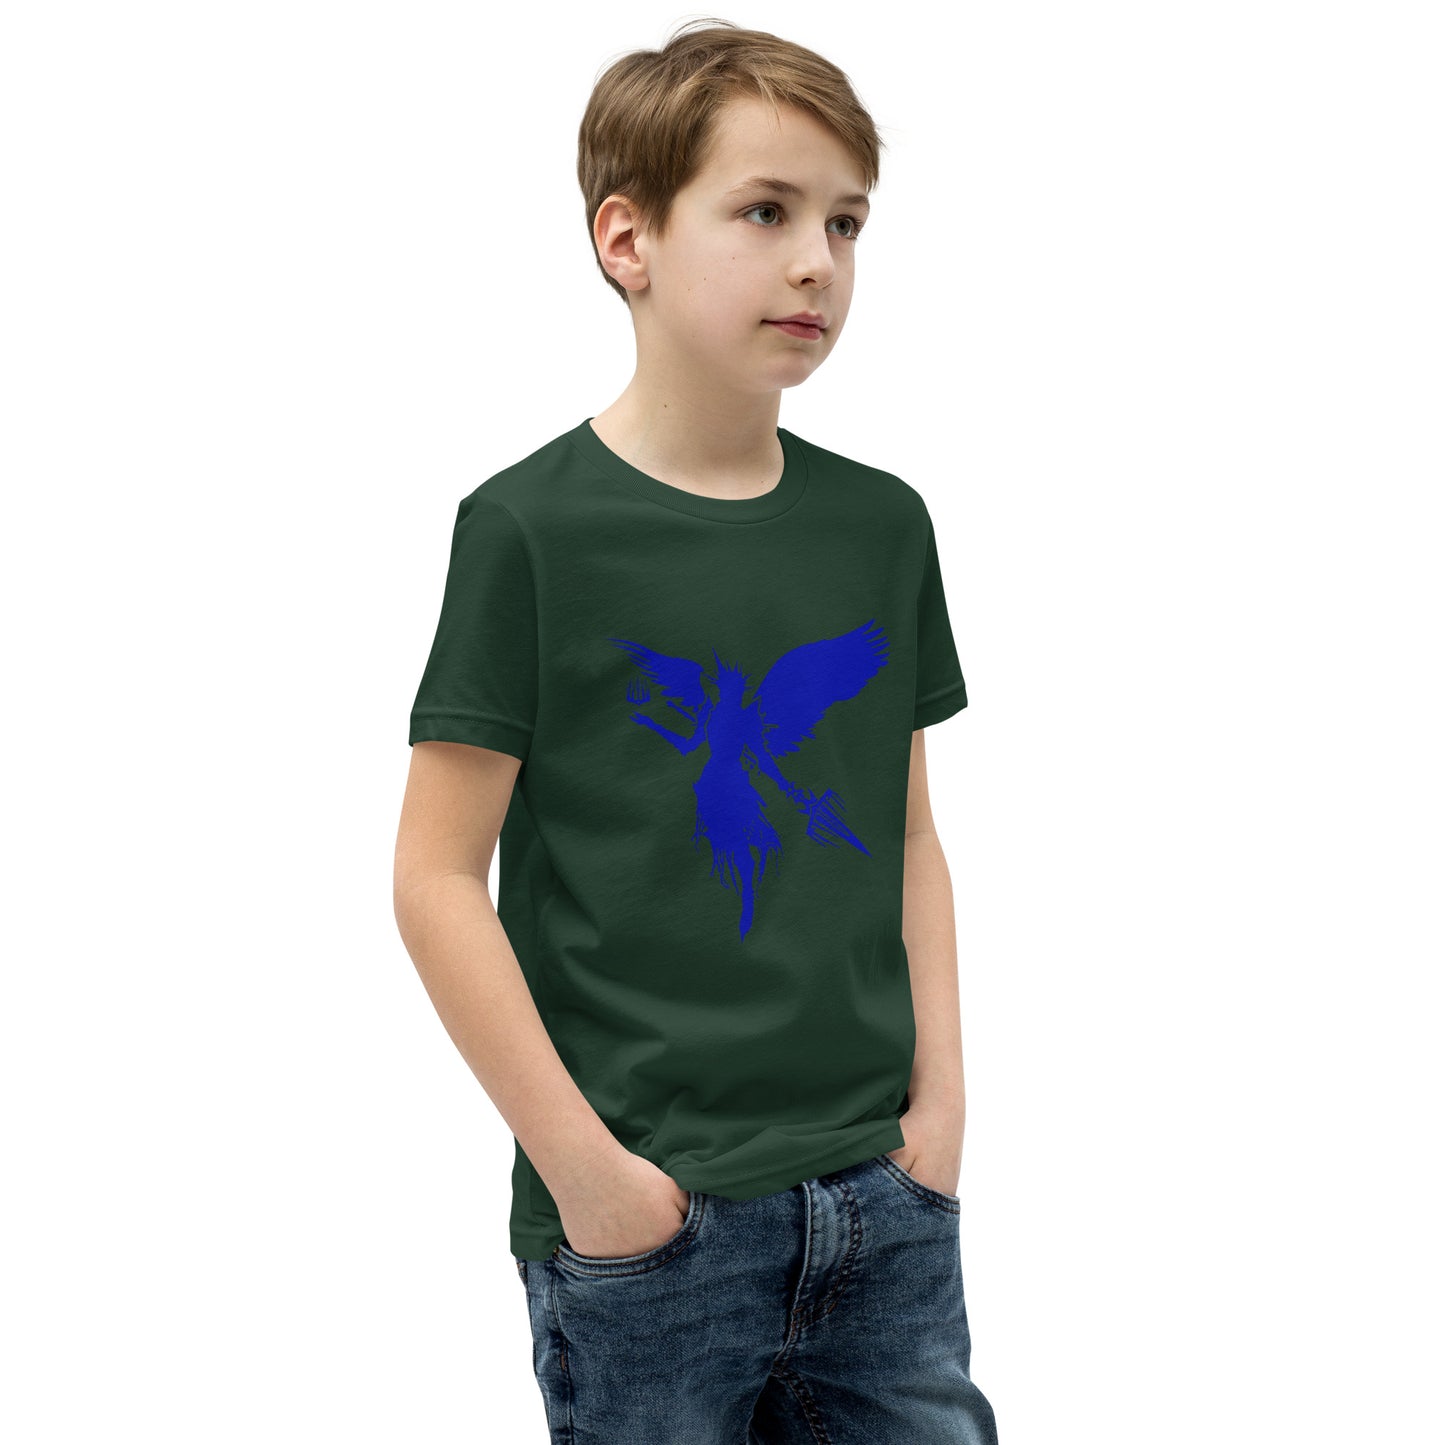 Wraith Eco Youth Short Sleeve T-Shirt